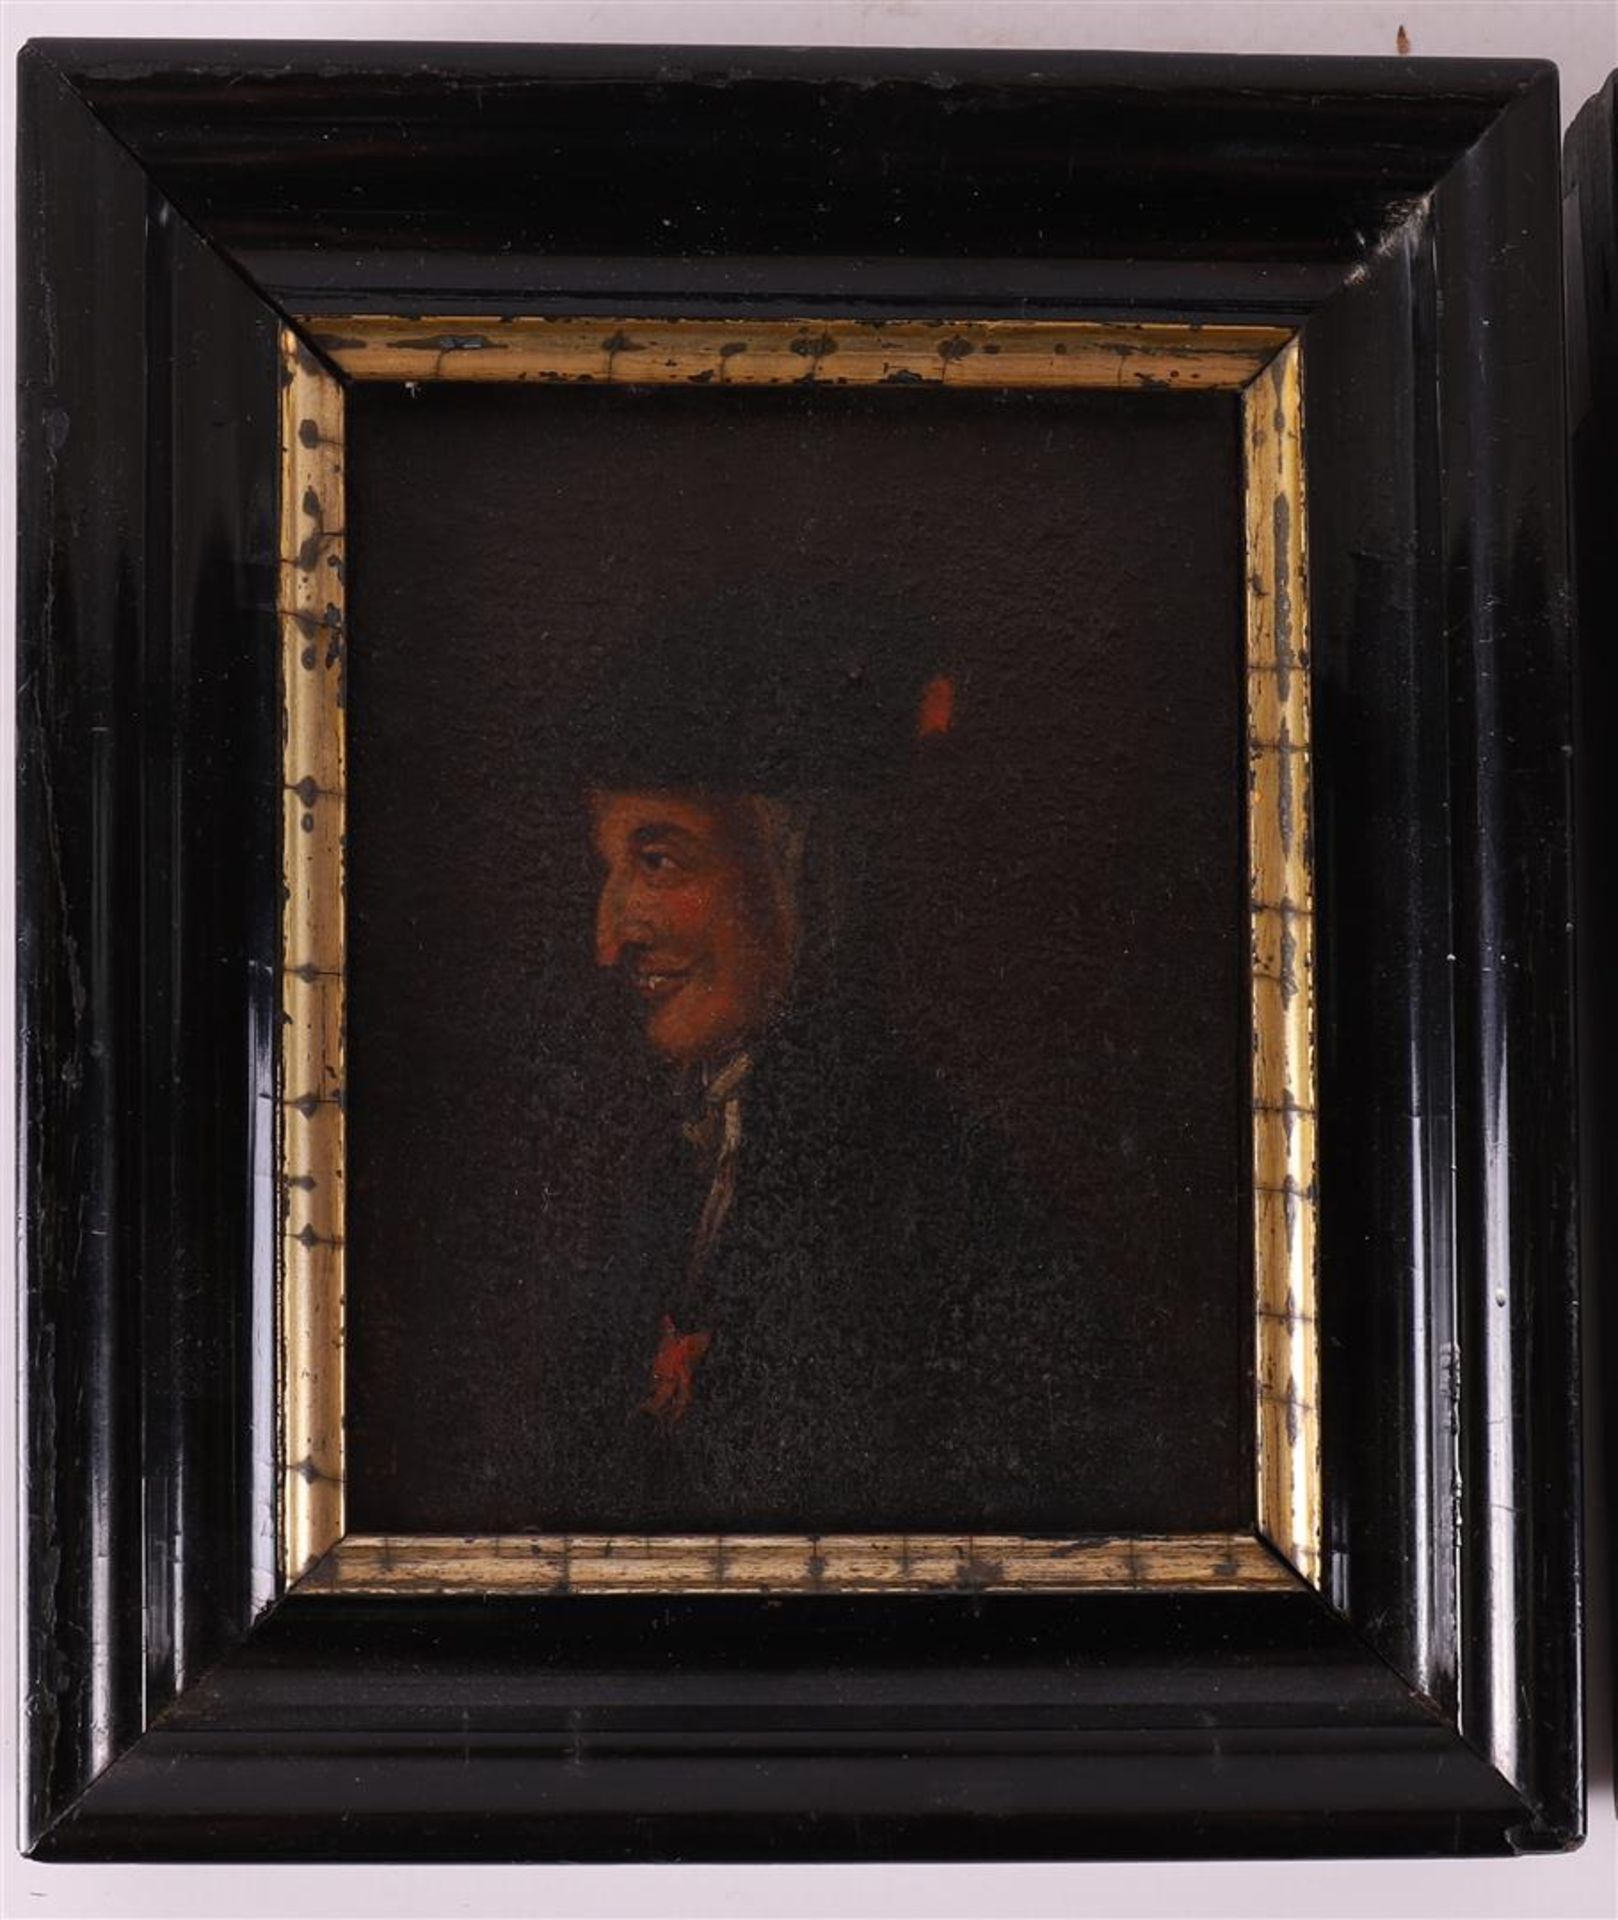 German school 18th/19th century "Portrait of man with glass" + "Portrait of man with hat", oil - Image 2 of 4